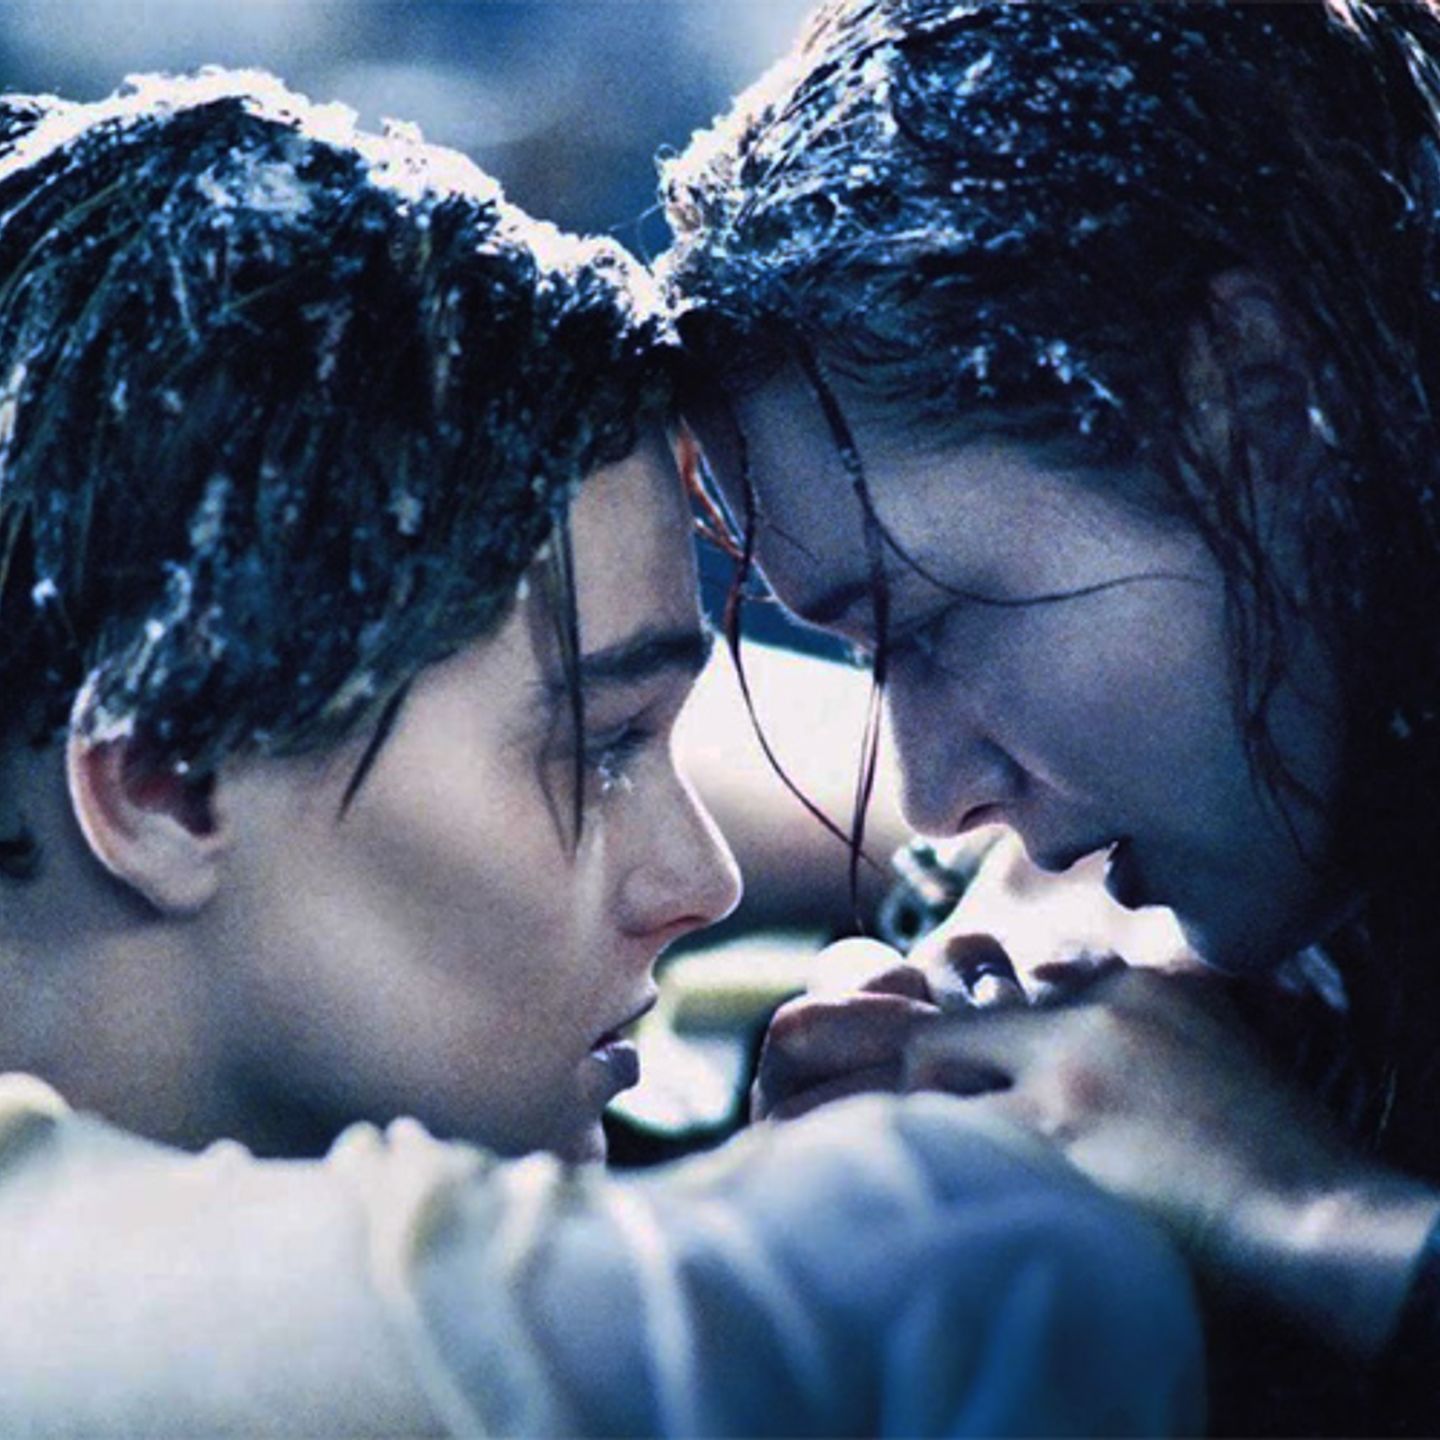 Leonardo DiCaprio og Kate Winslet i Titanic